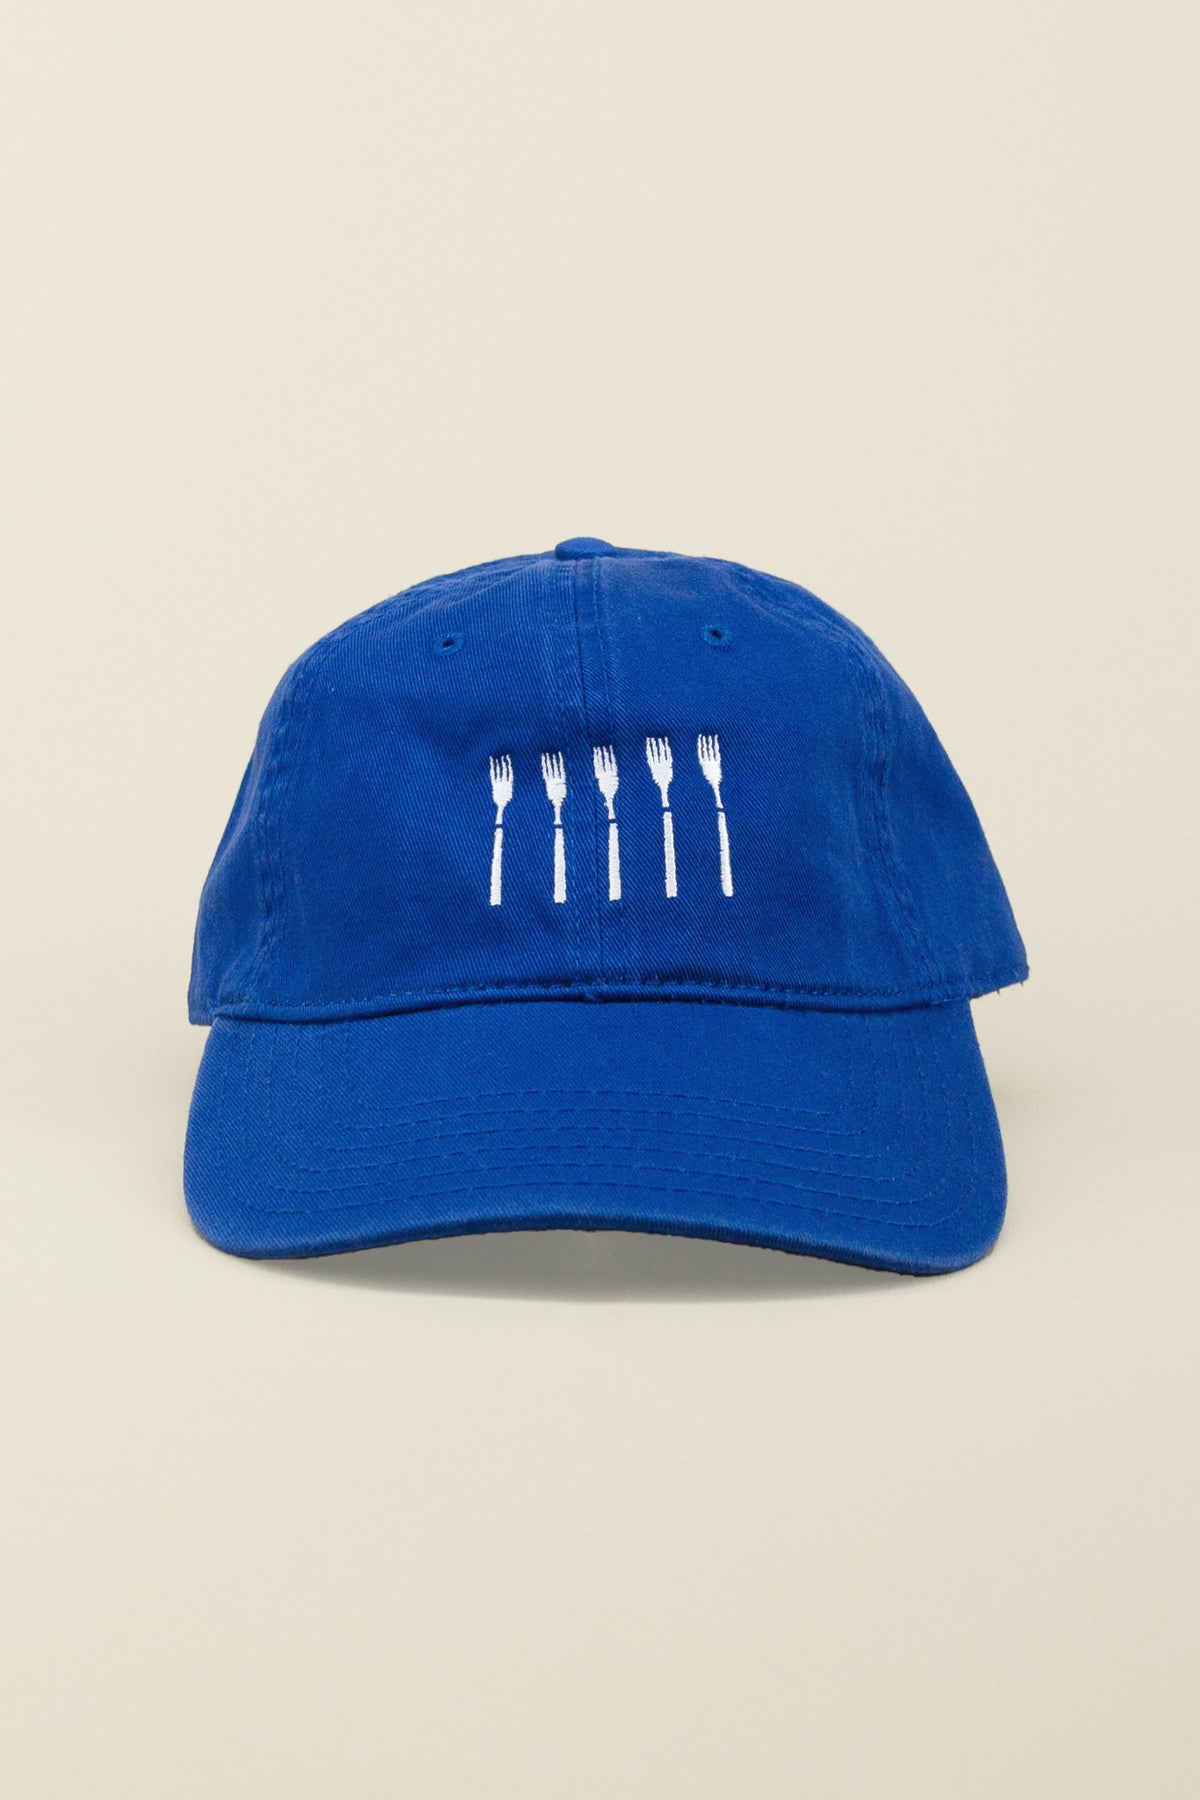 doughboys: five forks hat